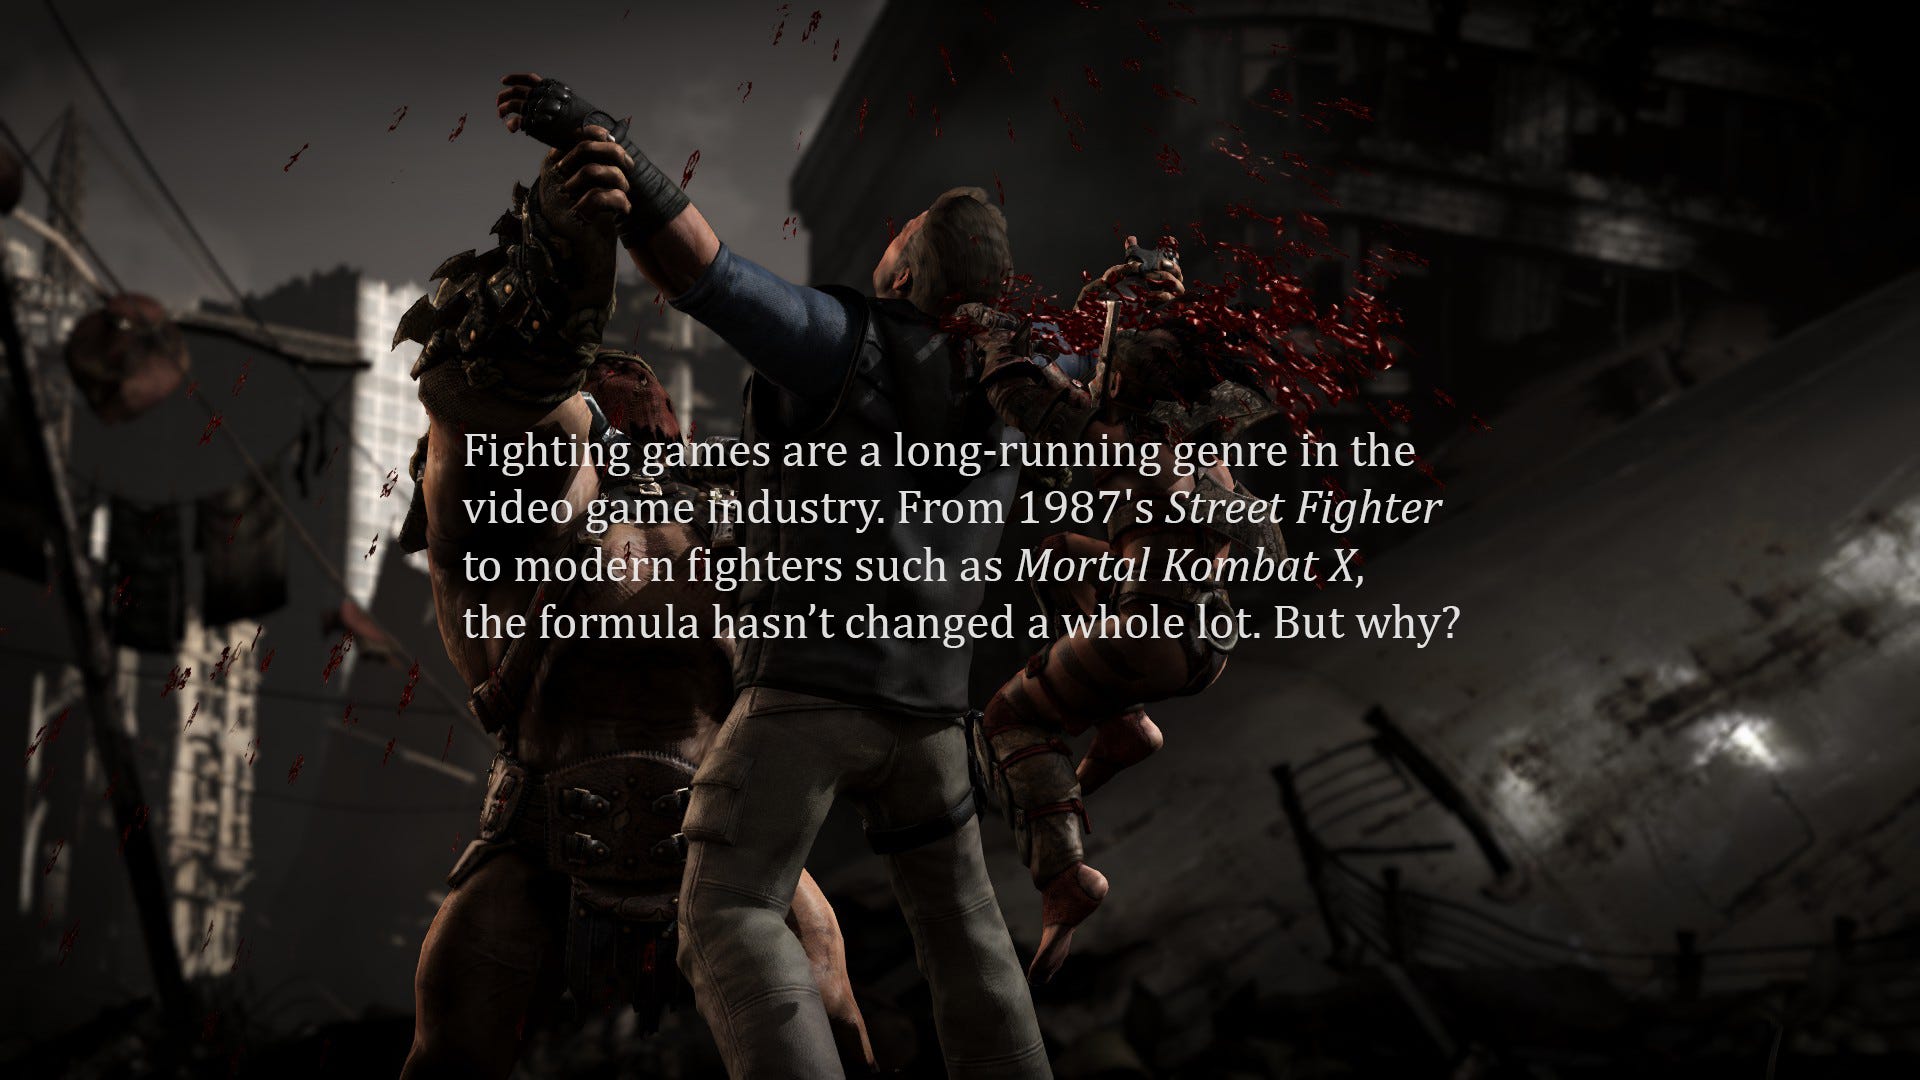 Mortal Kombat 1's lacking content draws negative comparisons to